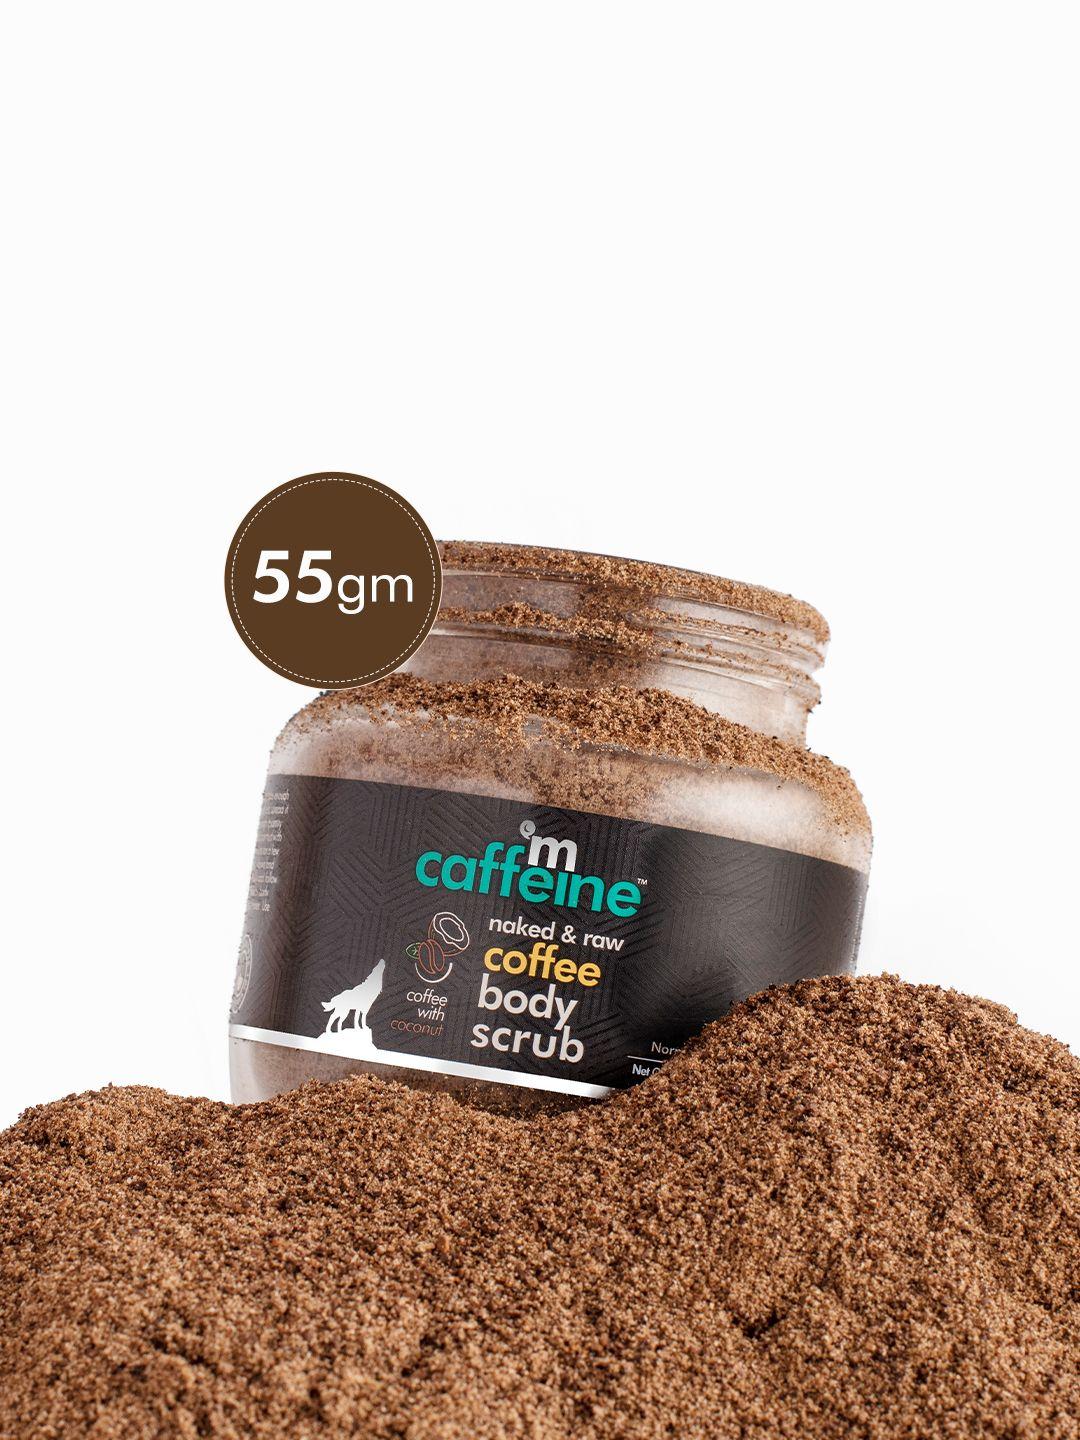 mcaffeine exfoliating coffee body scrub for tan removal & soft-smooth skin - 55 g